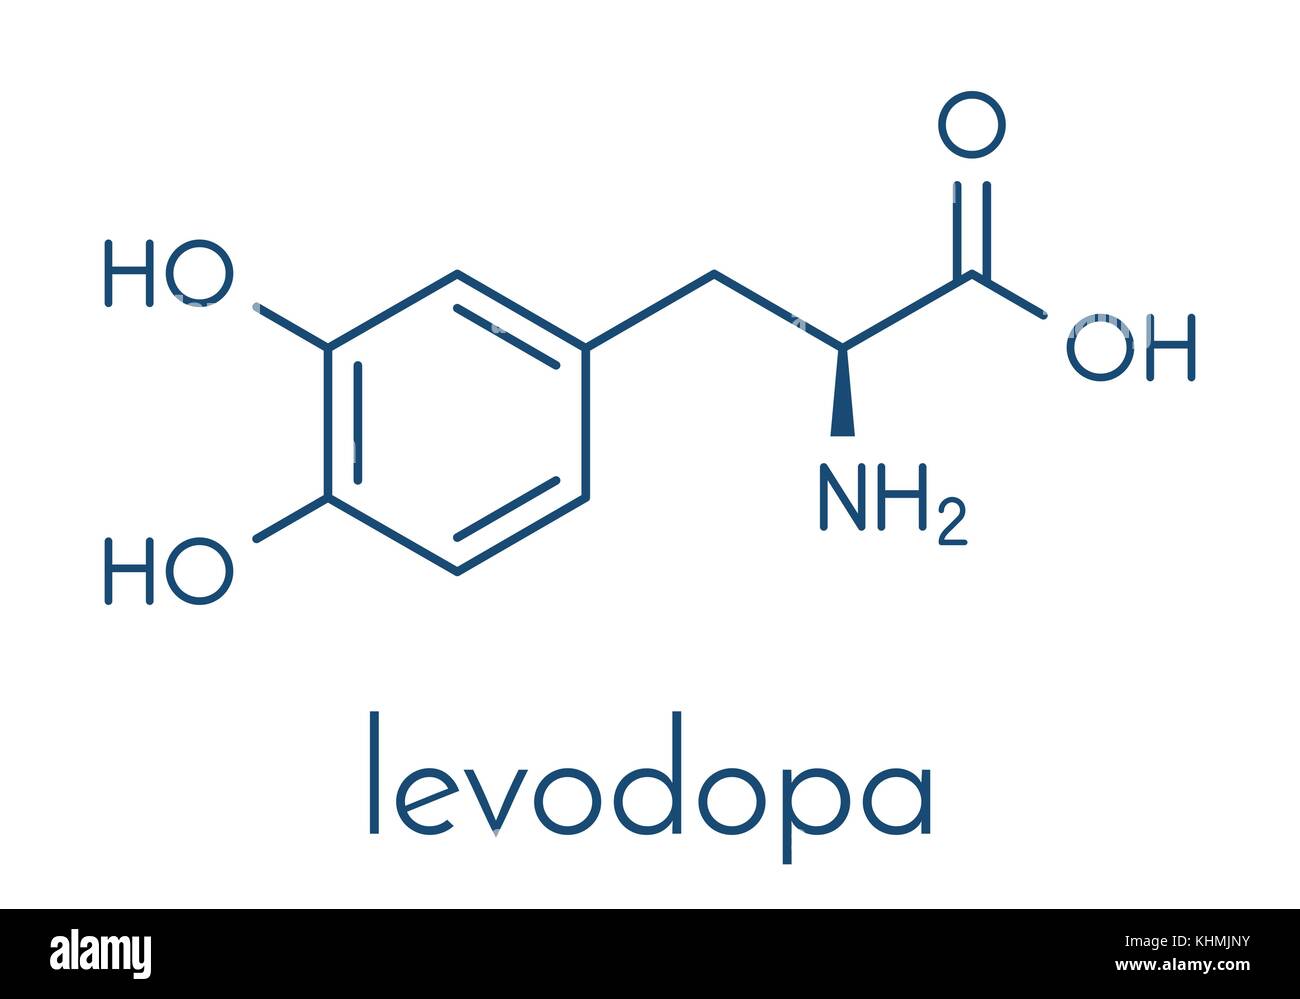 L-DOPA (levodopa) Parkinson's disease drug molecule. Skeletal formula. Stock Vector